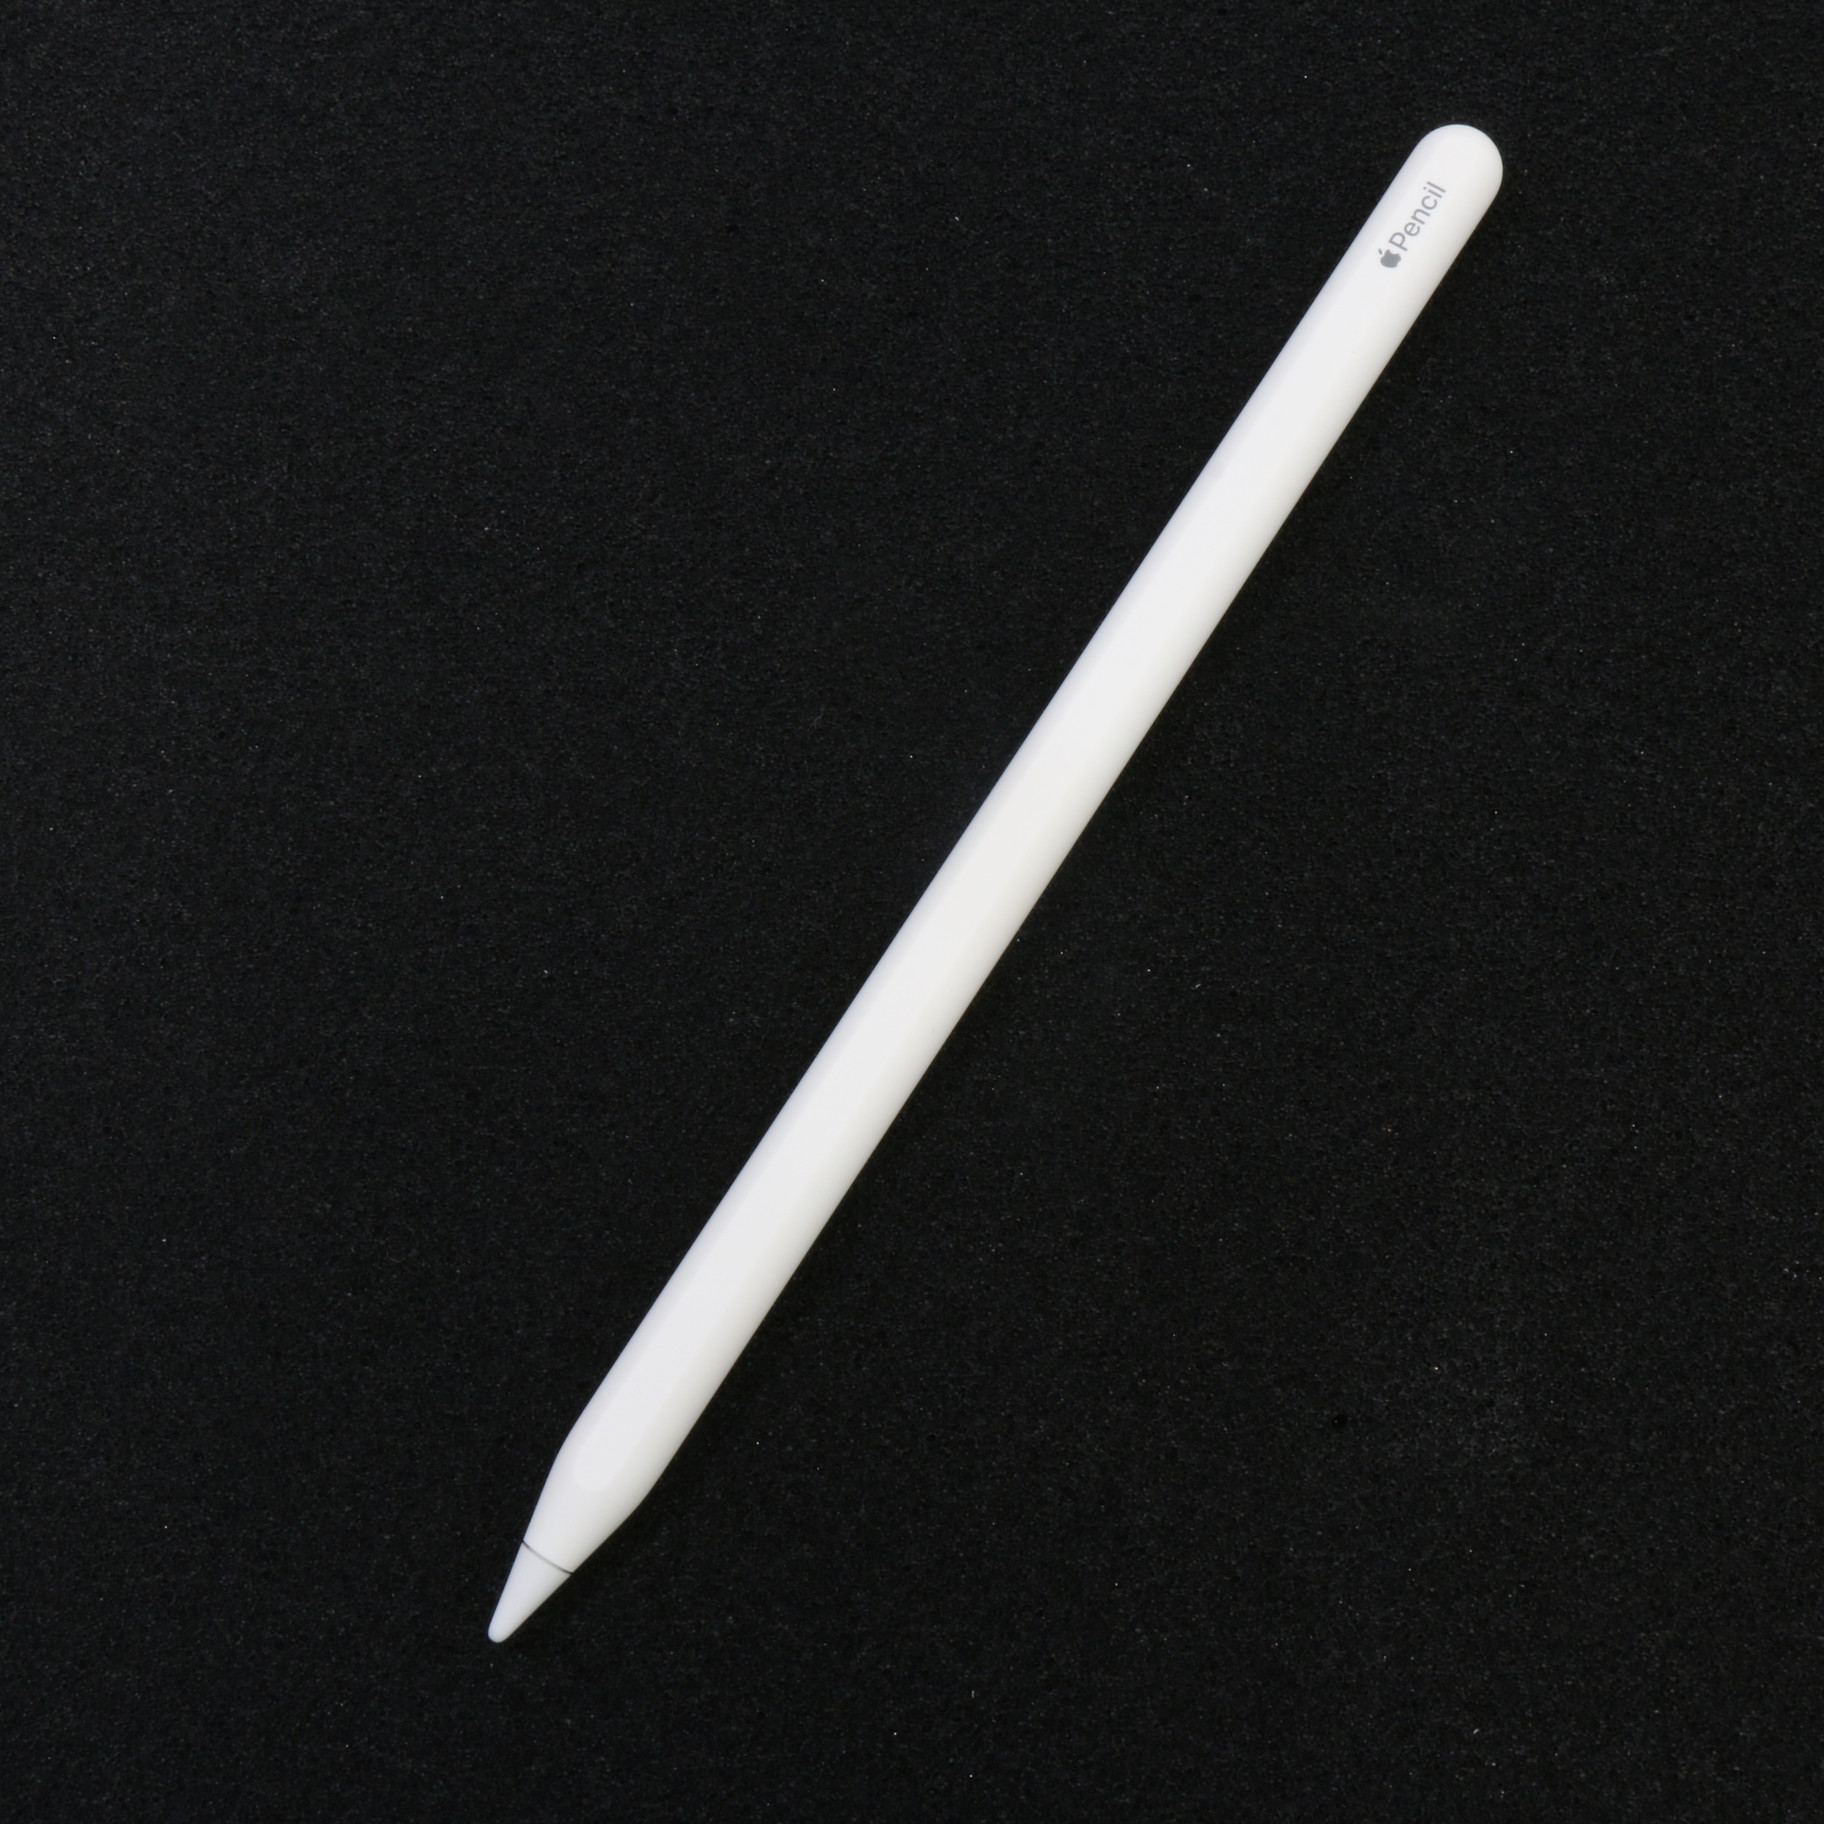 【新品】 アップル Apple Pencil 第2世代 [MU8F2J/A]